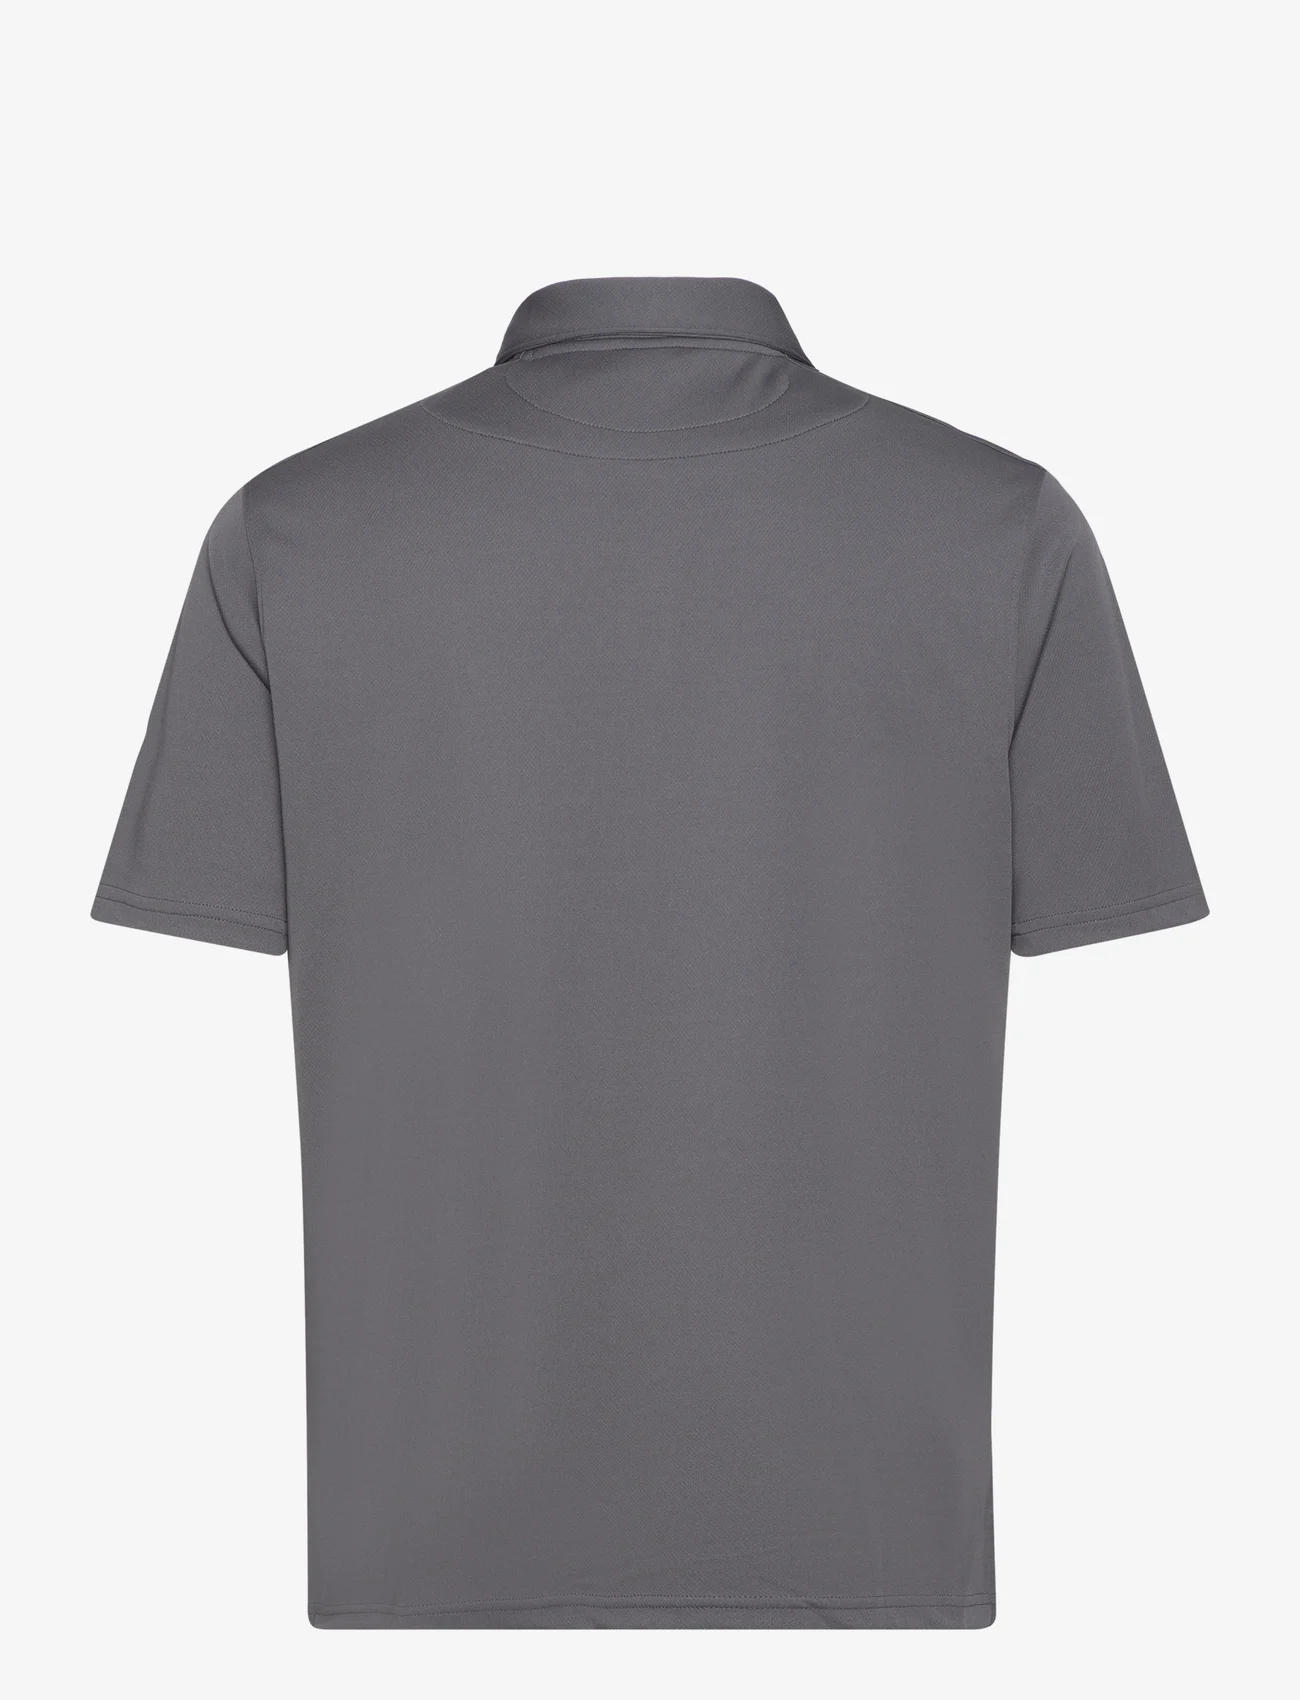 Oakley Sports - OAKLEY ICON TN PROTECT RC - kortärmade pikéer - uniform grey - 1